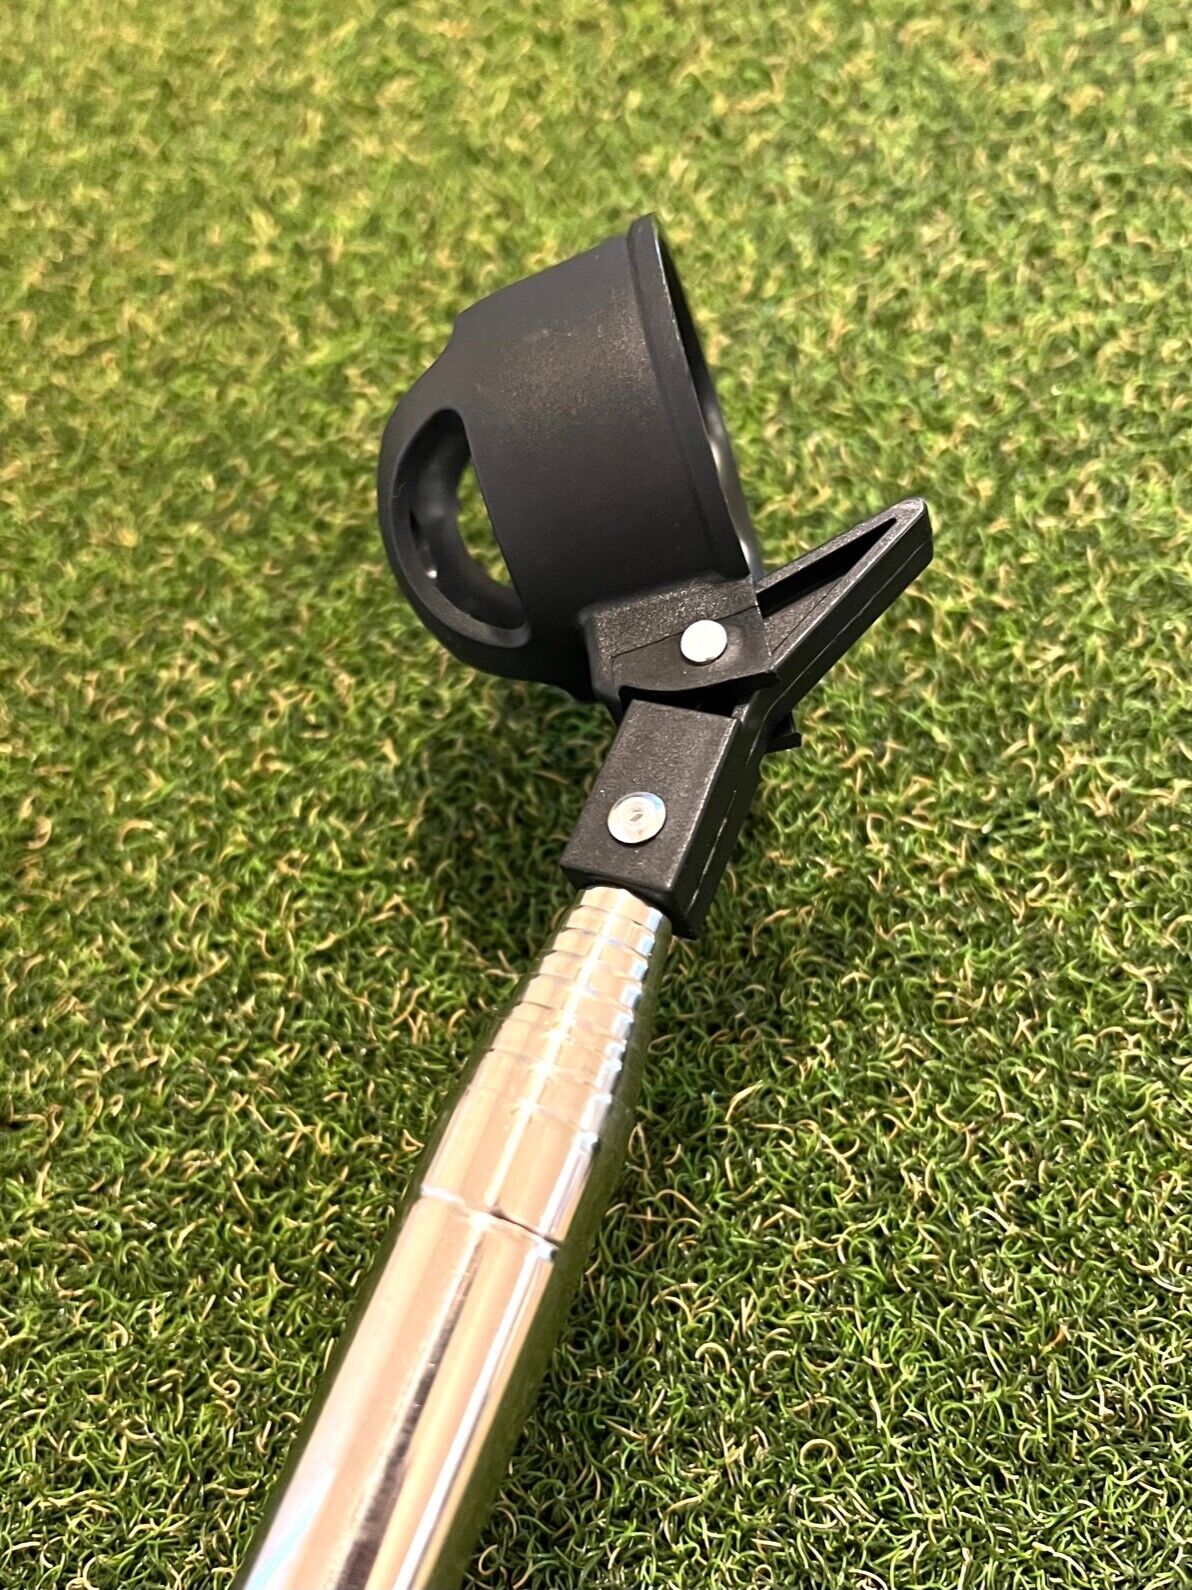 Aluminum Telescoping Compact Golf Ball Retriever - Black